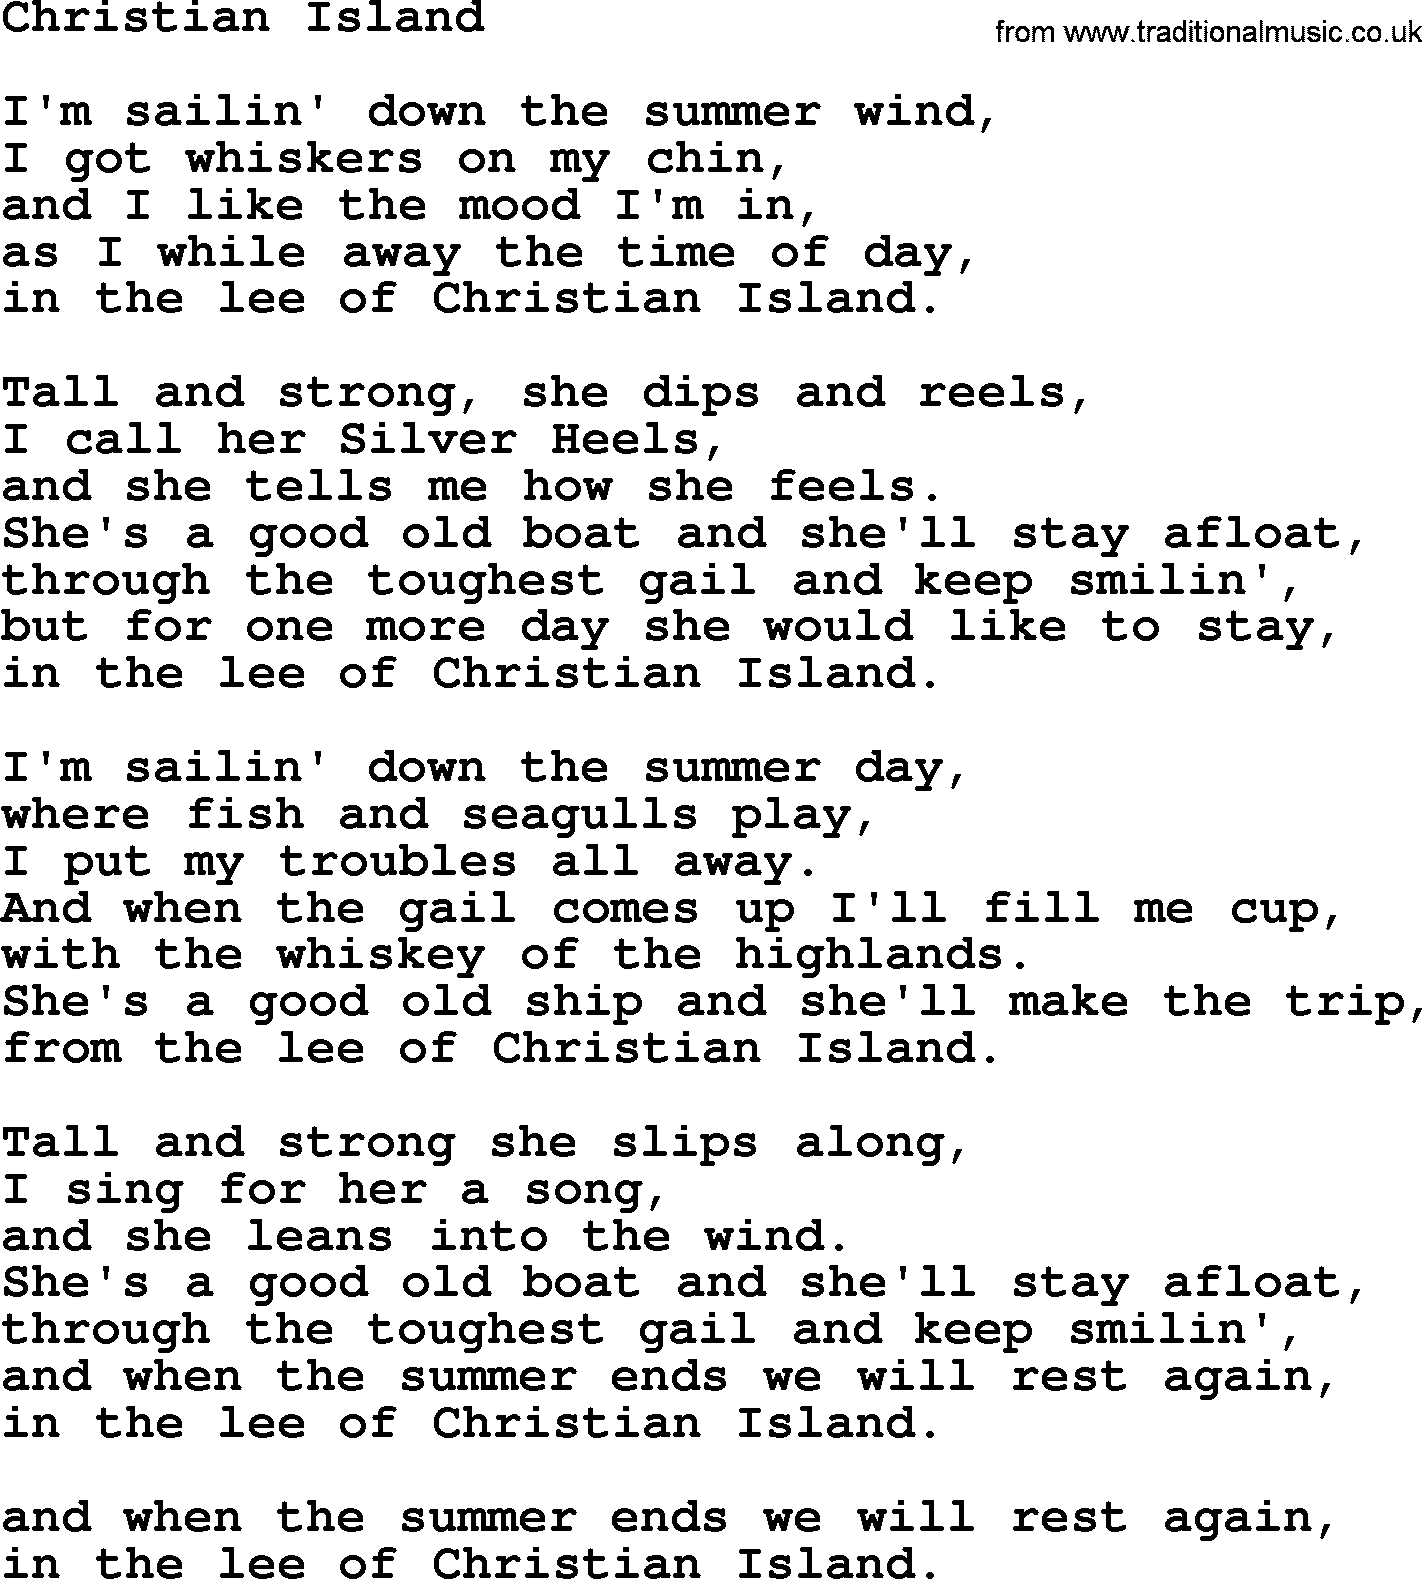 Gordon Lightfoot song Christian Island, lyrics